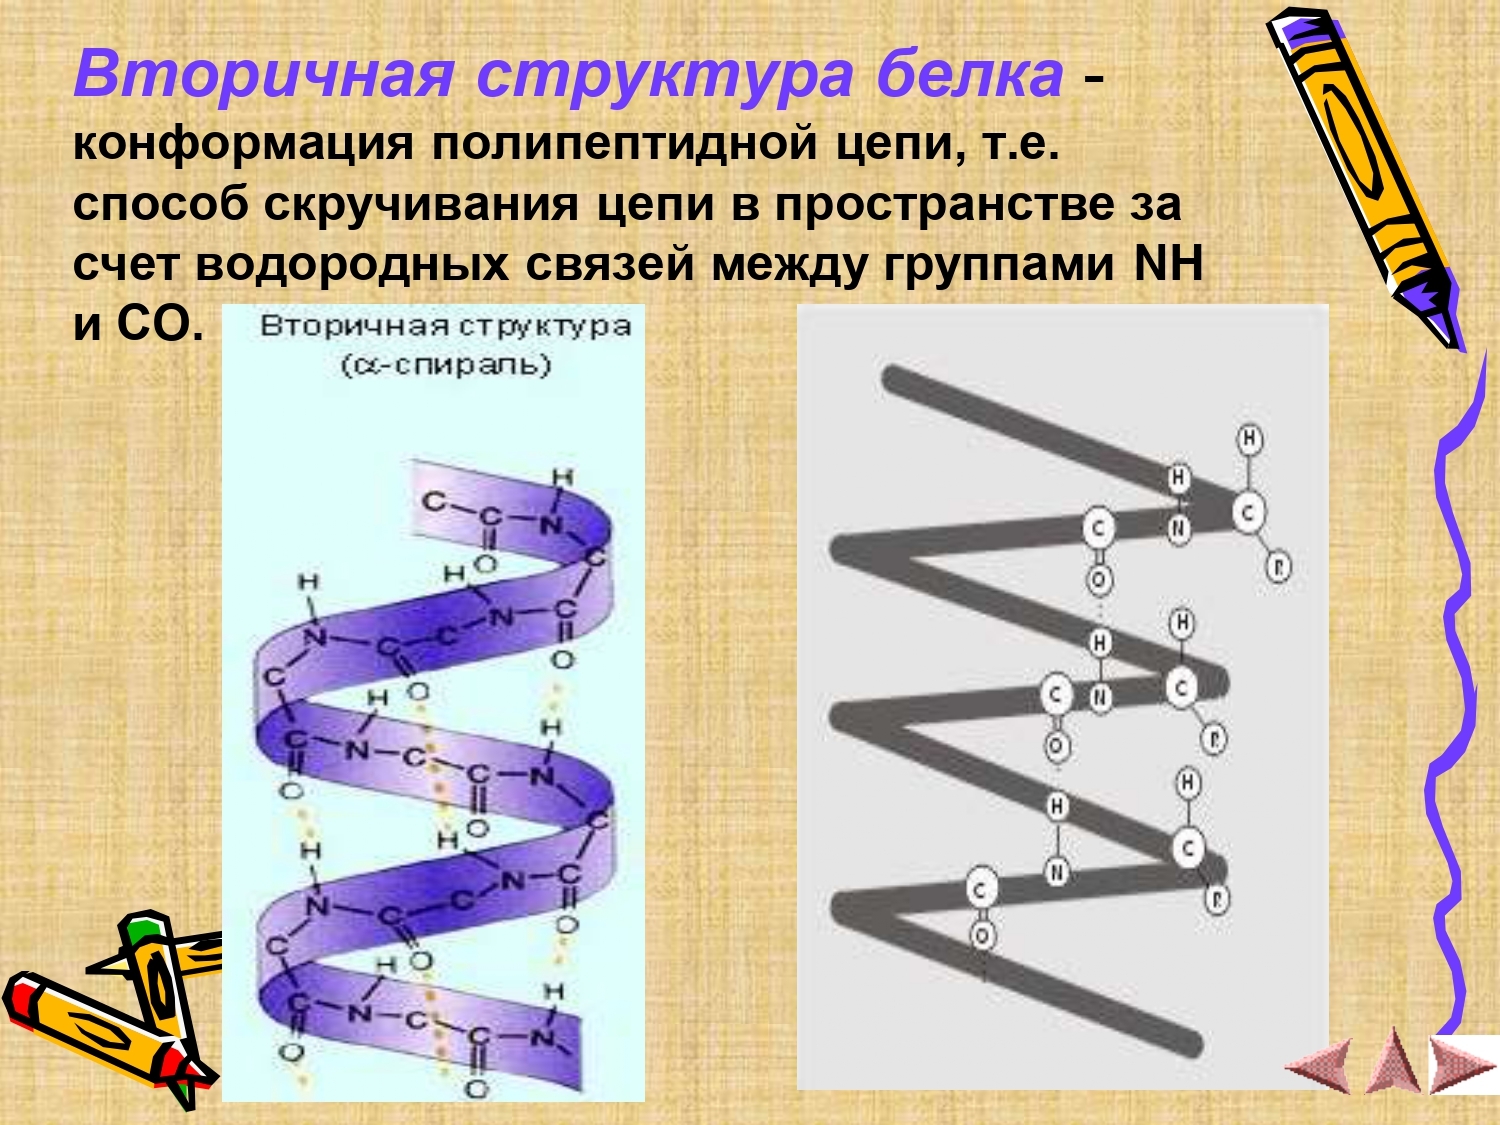 Нативная конформация белков. Конформация полипептидной цепи вторичная структура. Вторичная конформация белка. Вторичная структура белка. Конформация белковых молекул вторичная и третичная структуры.